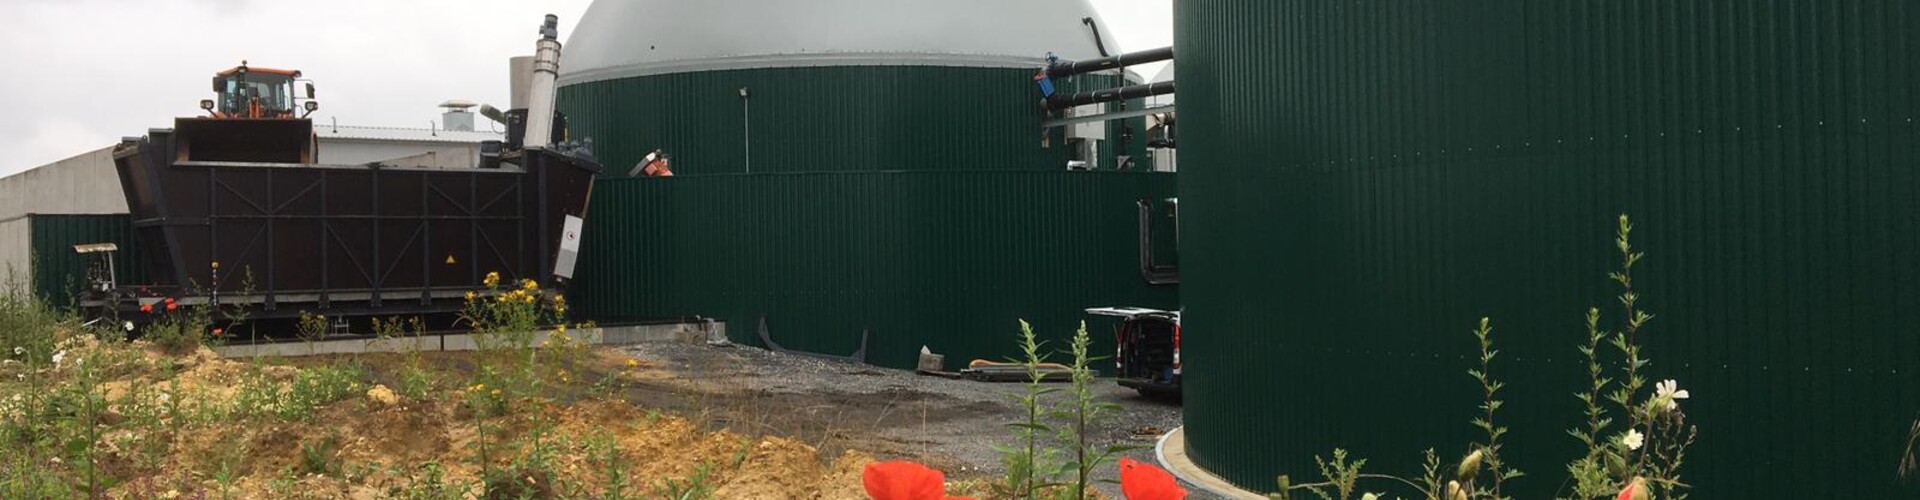 Biogasinstallatie Laon, Frankrijk